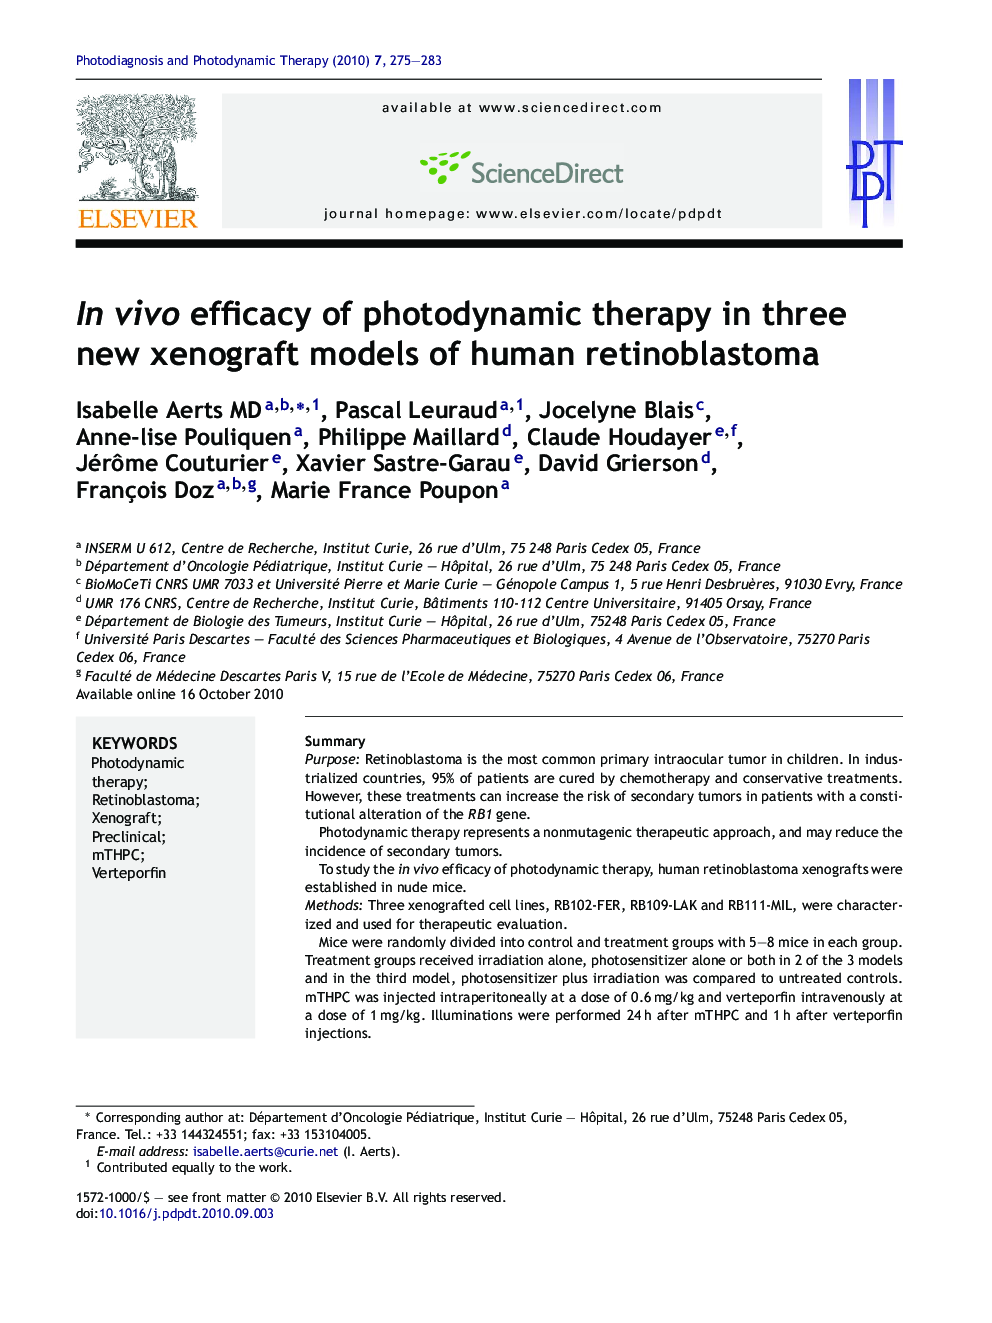 In vivo efficacy of photodynamic therapy in three new xenograft models of human retinoblastoma